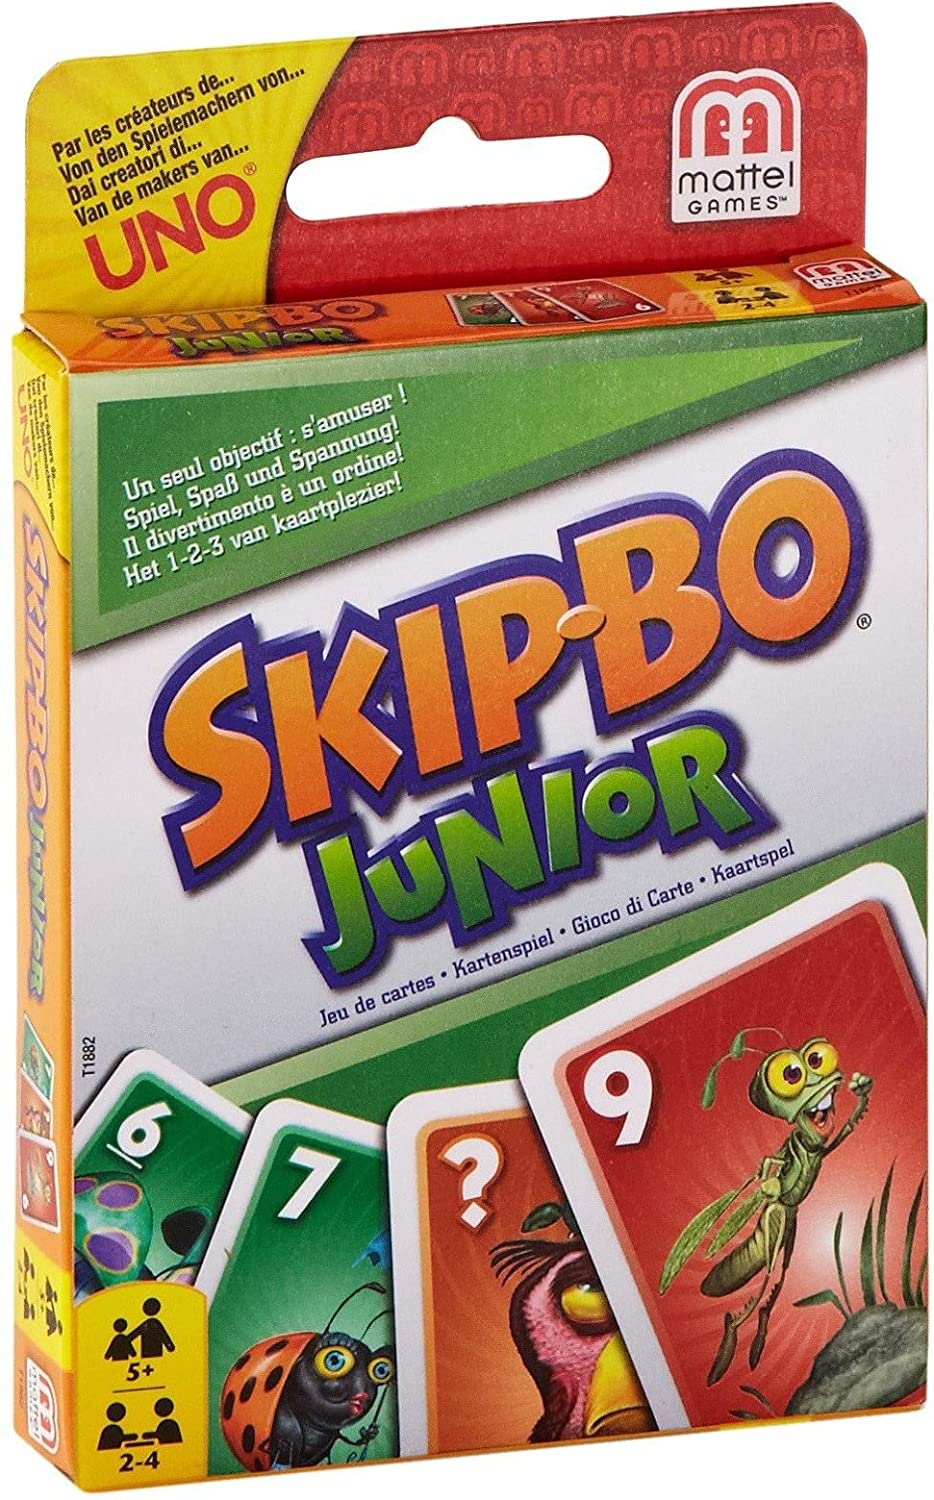 Skip bo card game video